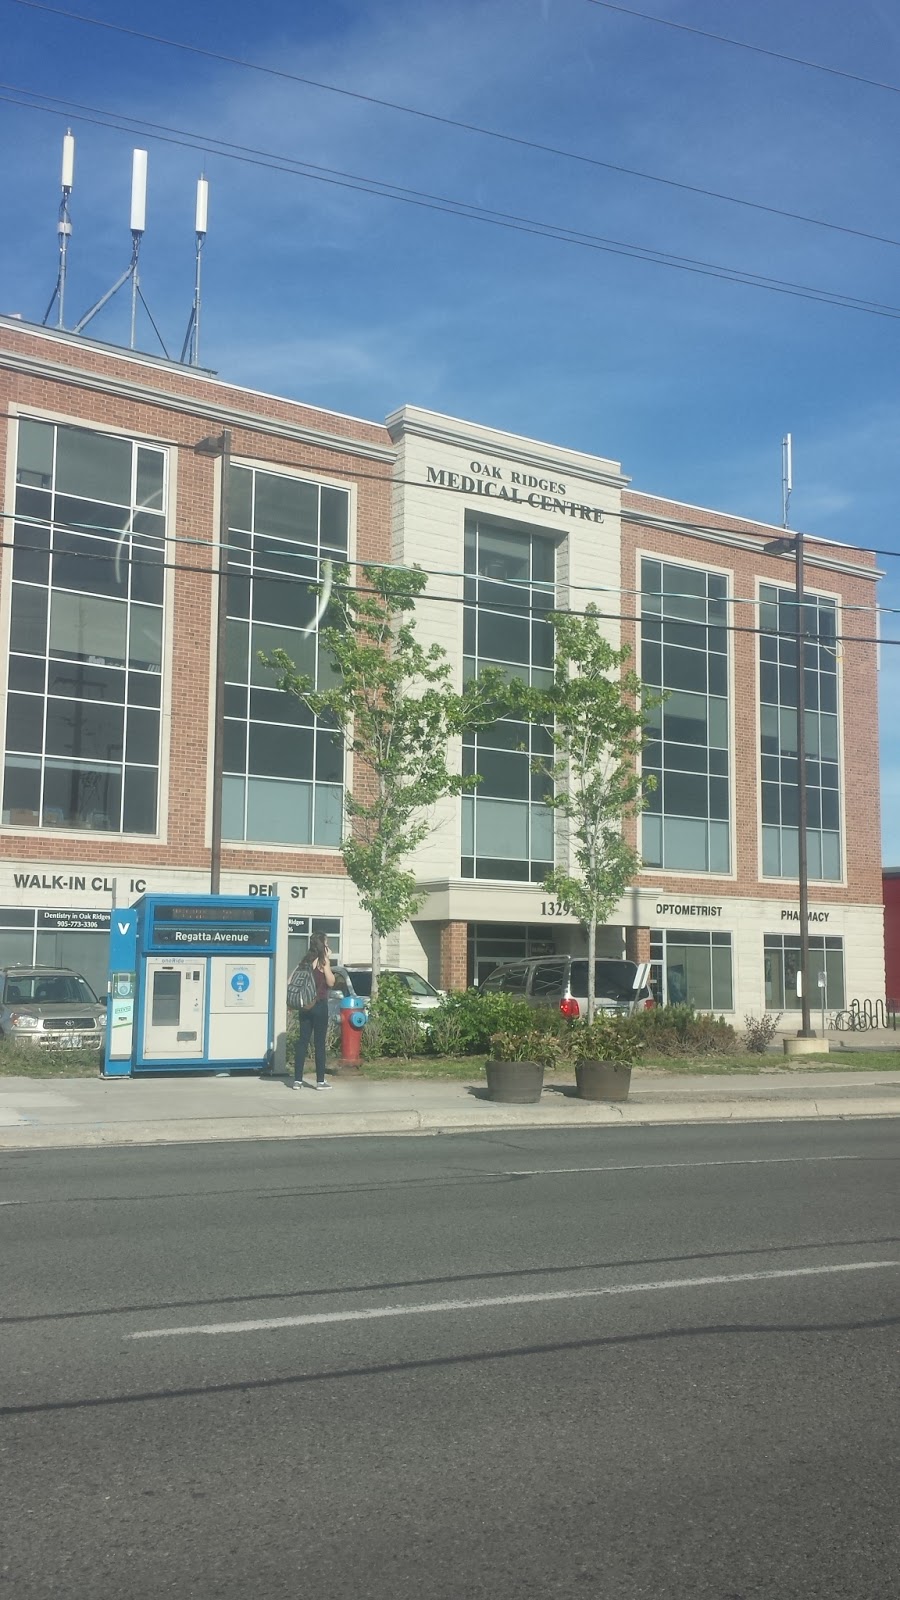 Dynacare Laboratory and Health Services Centre | 13291 Yonge St #103, Richmond Hill, ON L4E 4L6, Canada | Phone: (905) 773-7936